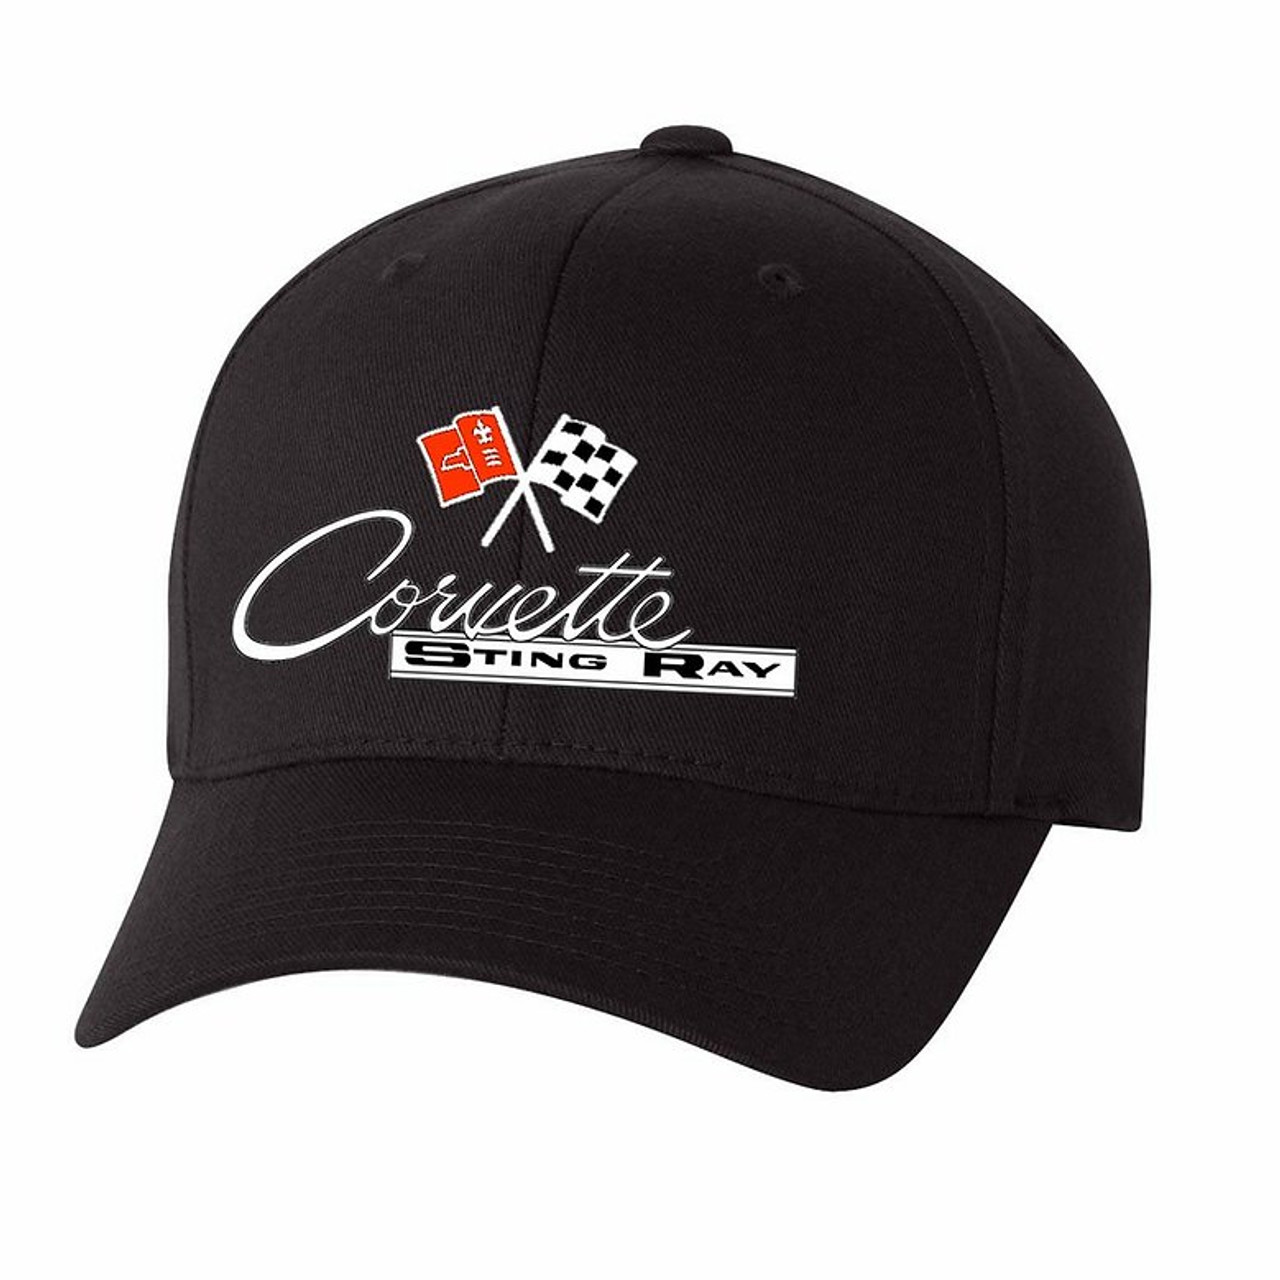 C2 Corvette Sting Ray Black Flex Fit Hat